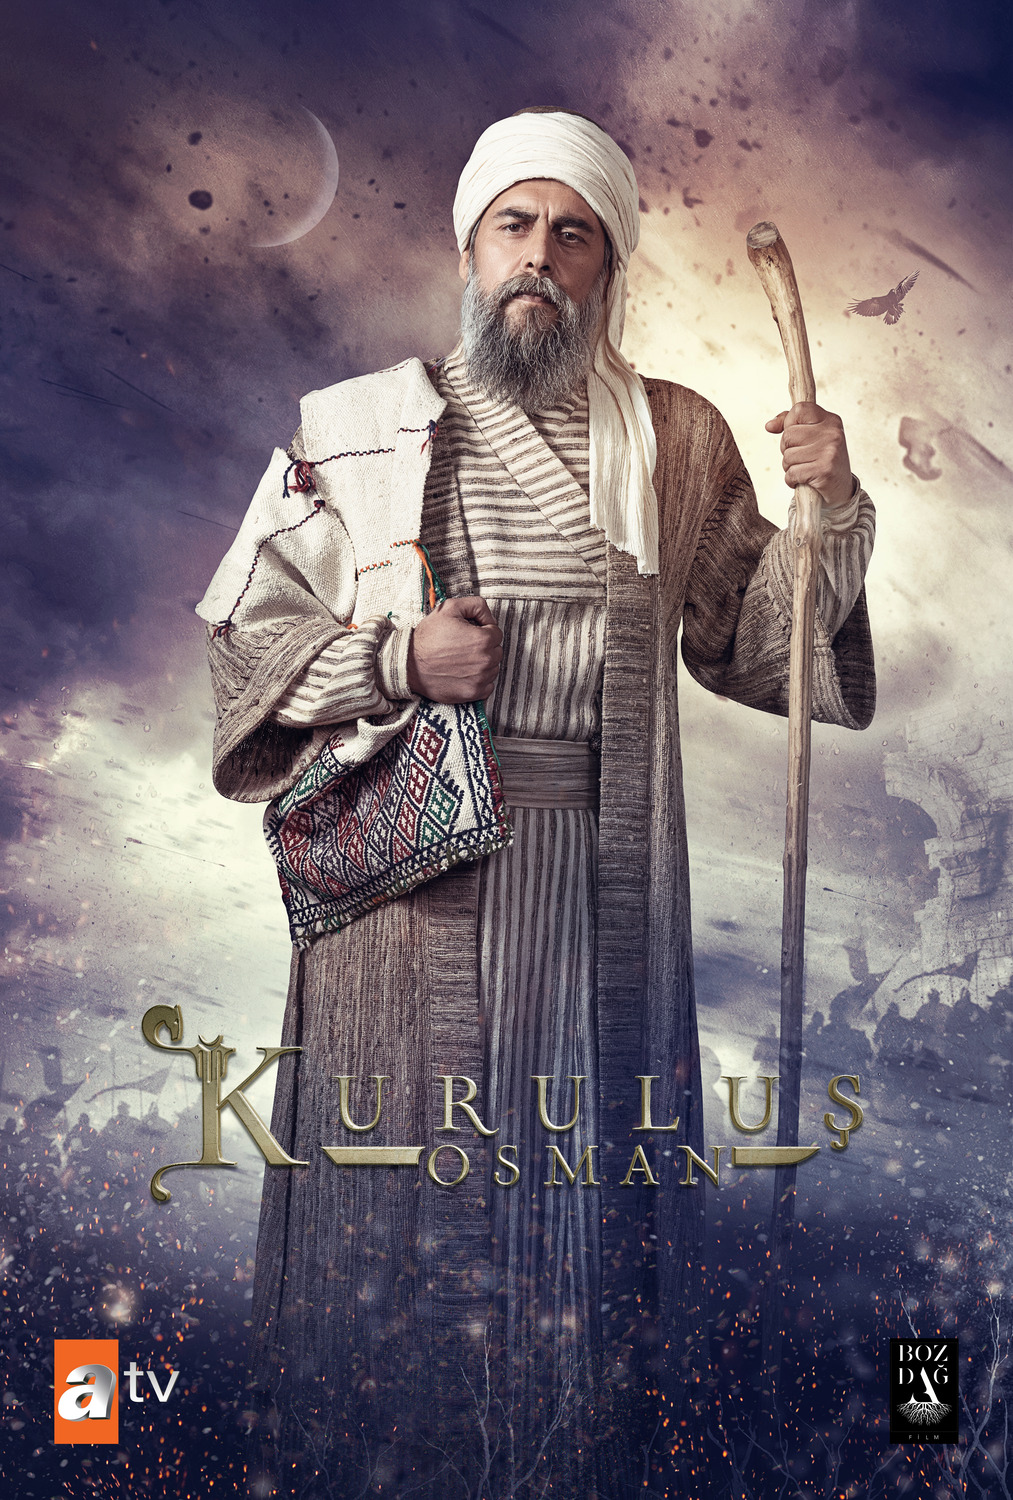 Extra Large TV Poster Image for Kurulus: Osman (#13 of 13)